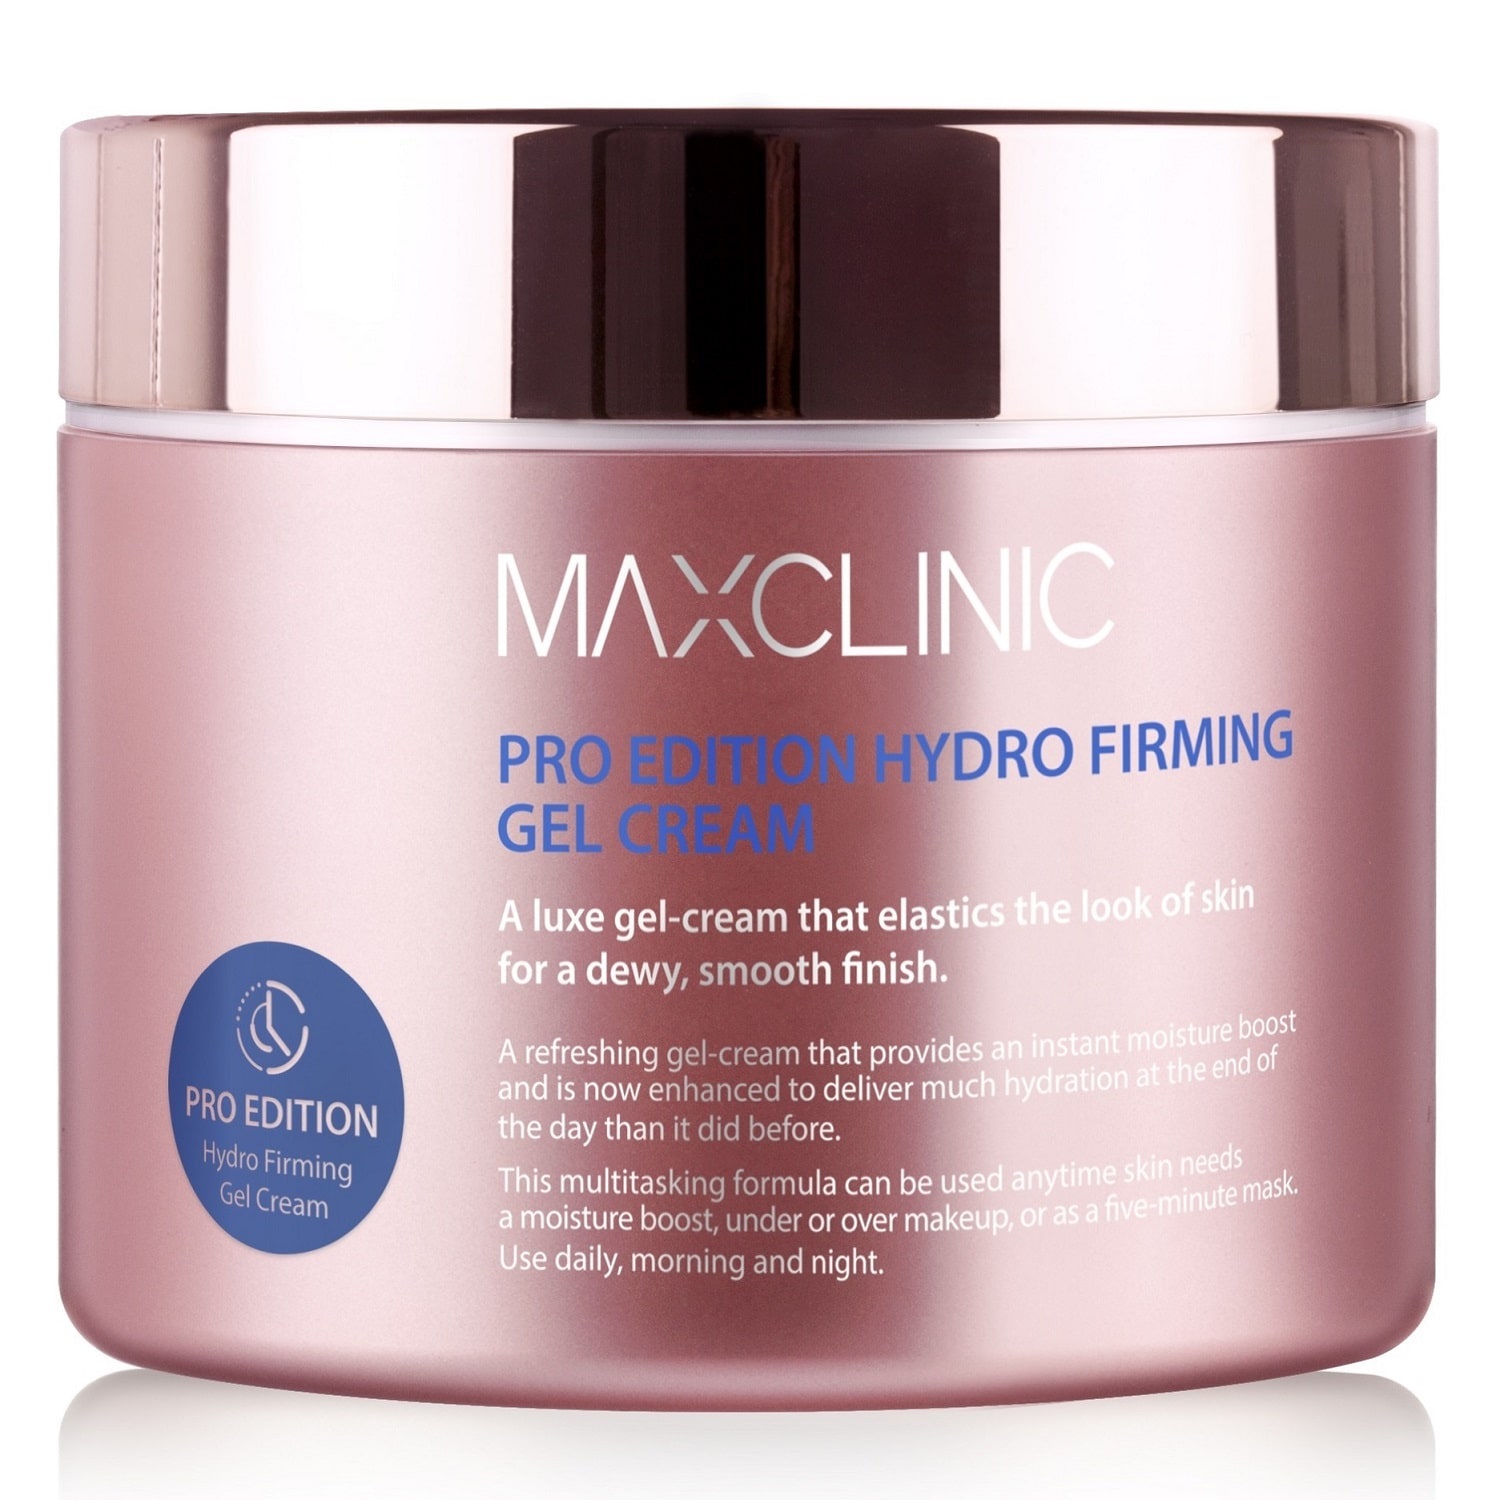 Maxclinic Укрепляющий крем-гель для эластичности и увлажнения кожи Pro-Edition Hydro Firming Gel Cream, 200 г (Maxclinic, Face Care) maxclinic pro edition hydro firming gel cream